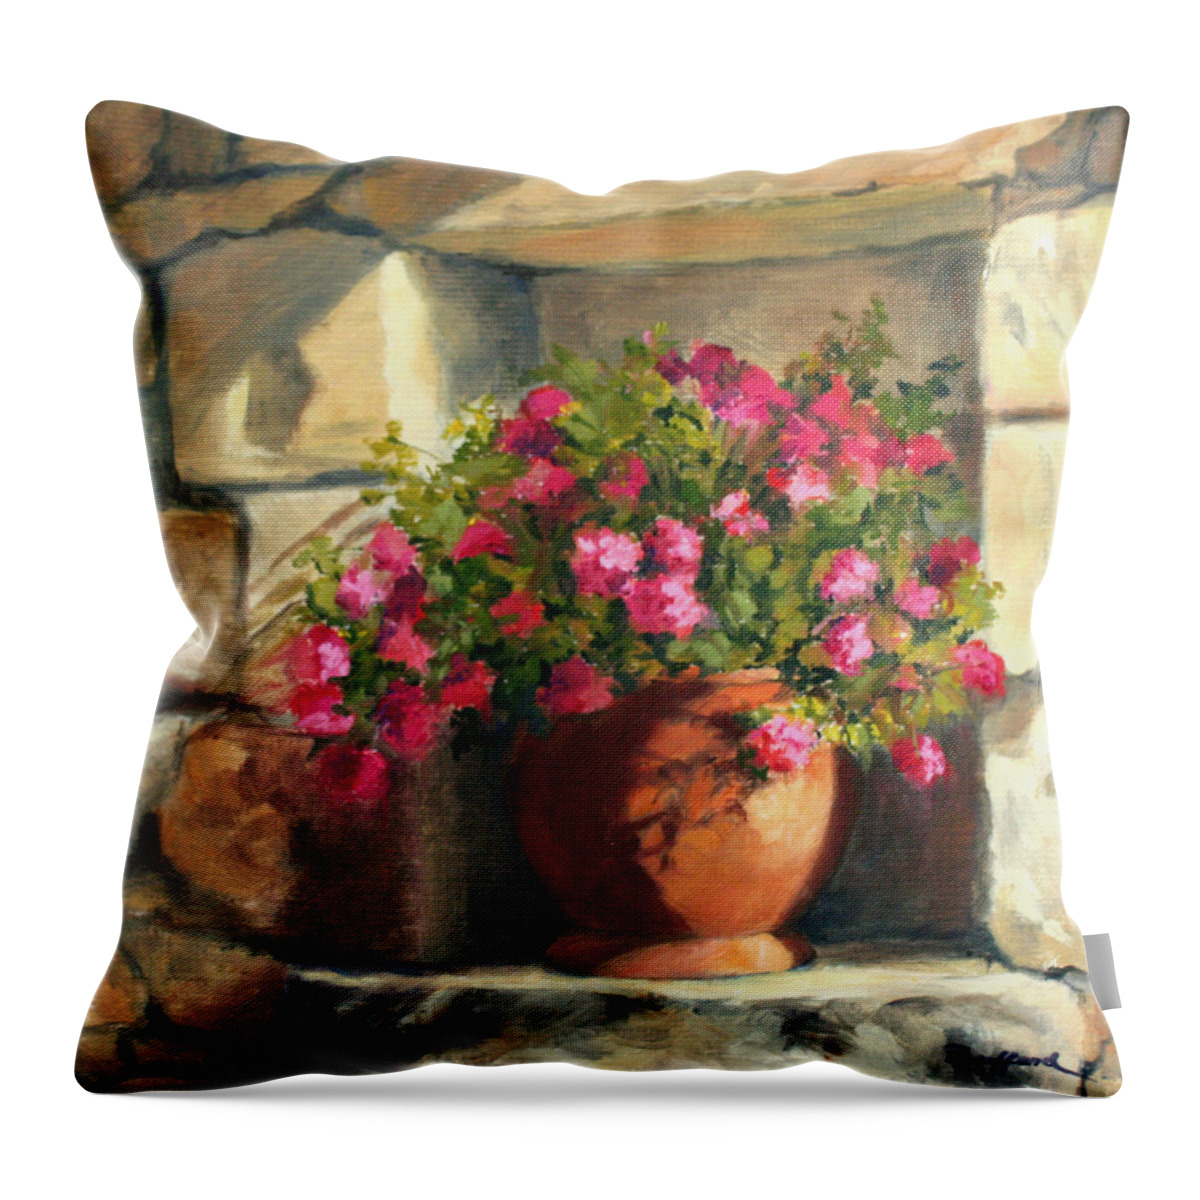 European Throw Pillow featuring the painting Garden Niche II by Vikki Bouffard